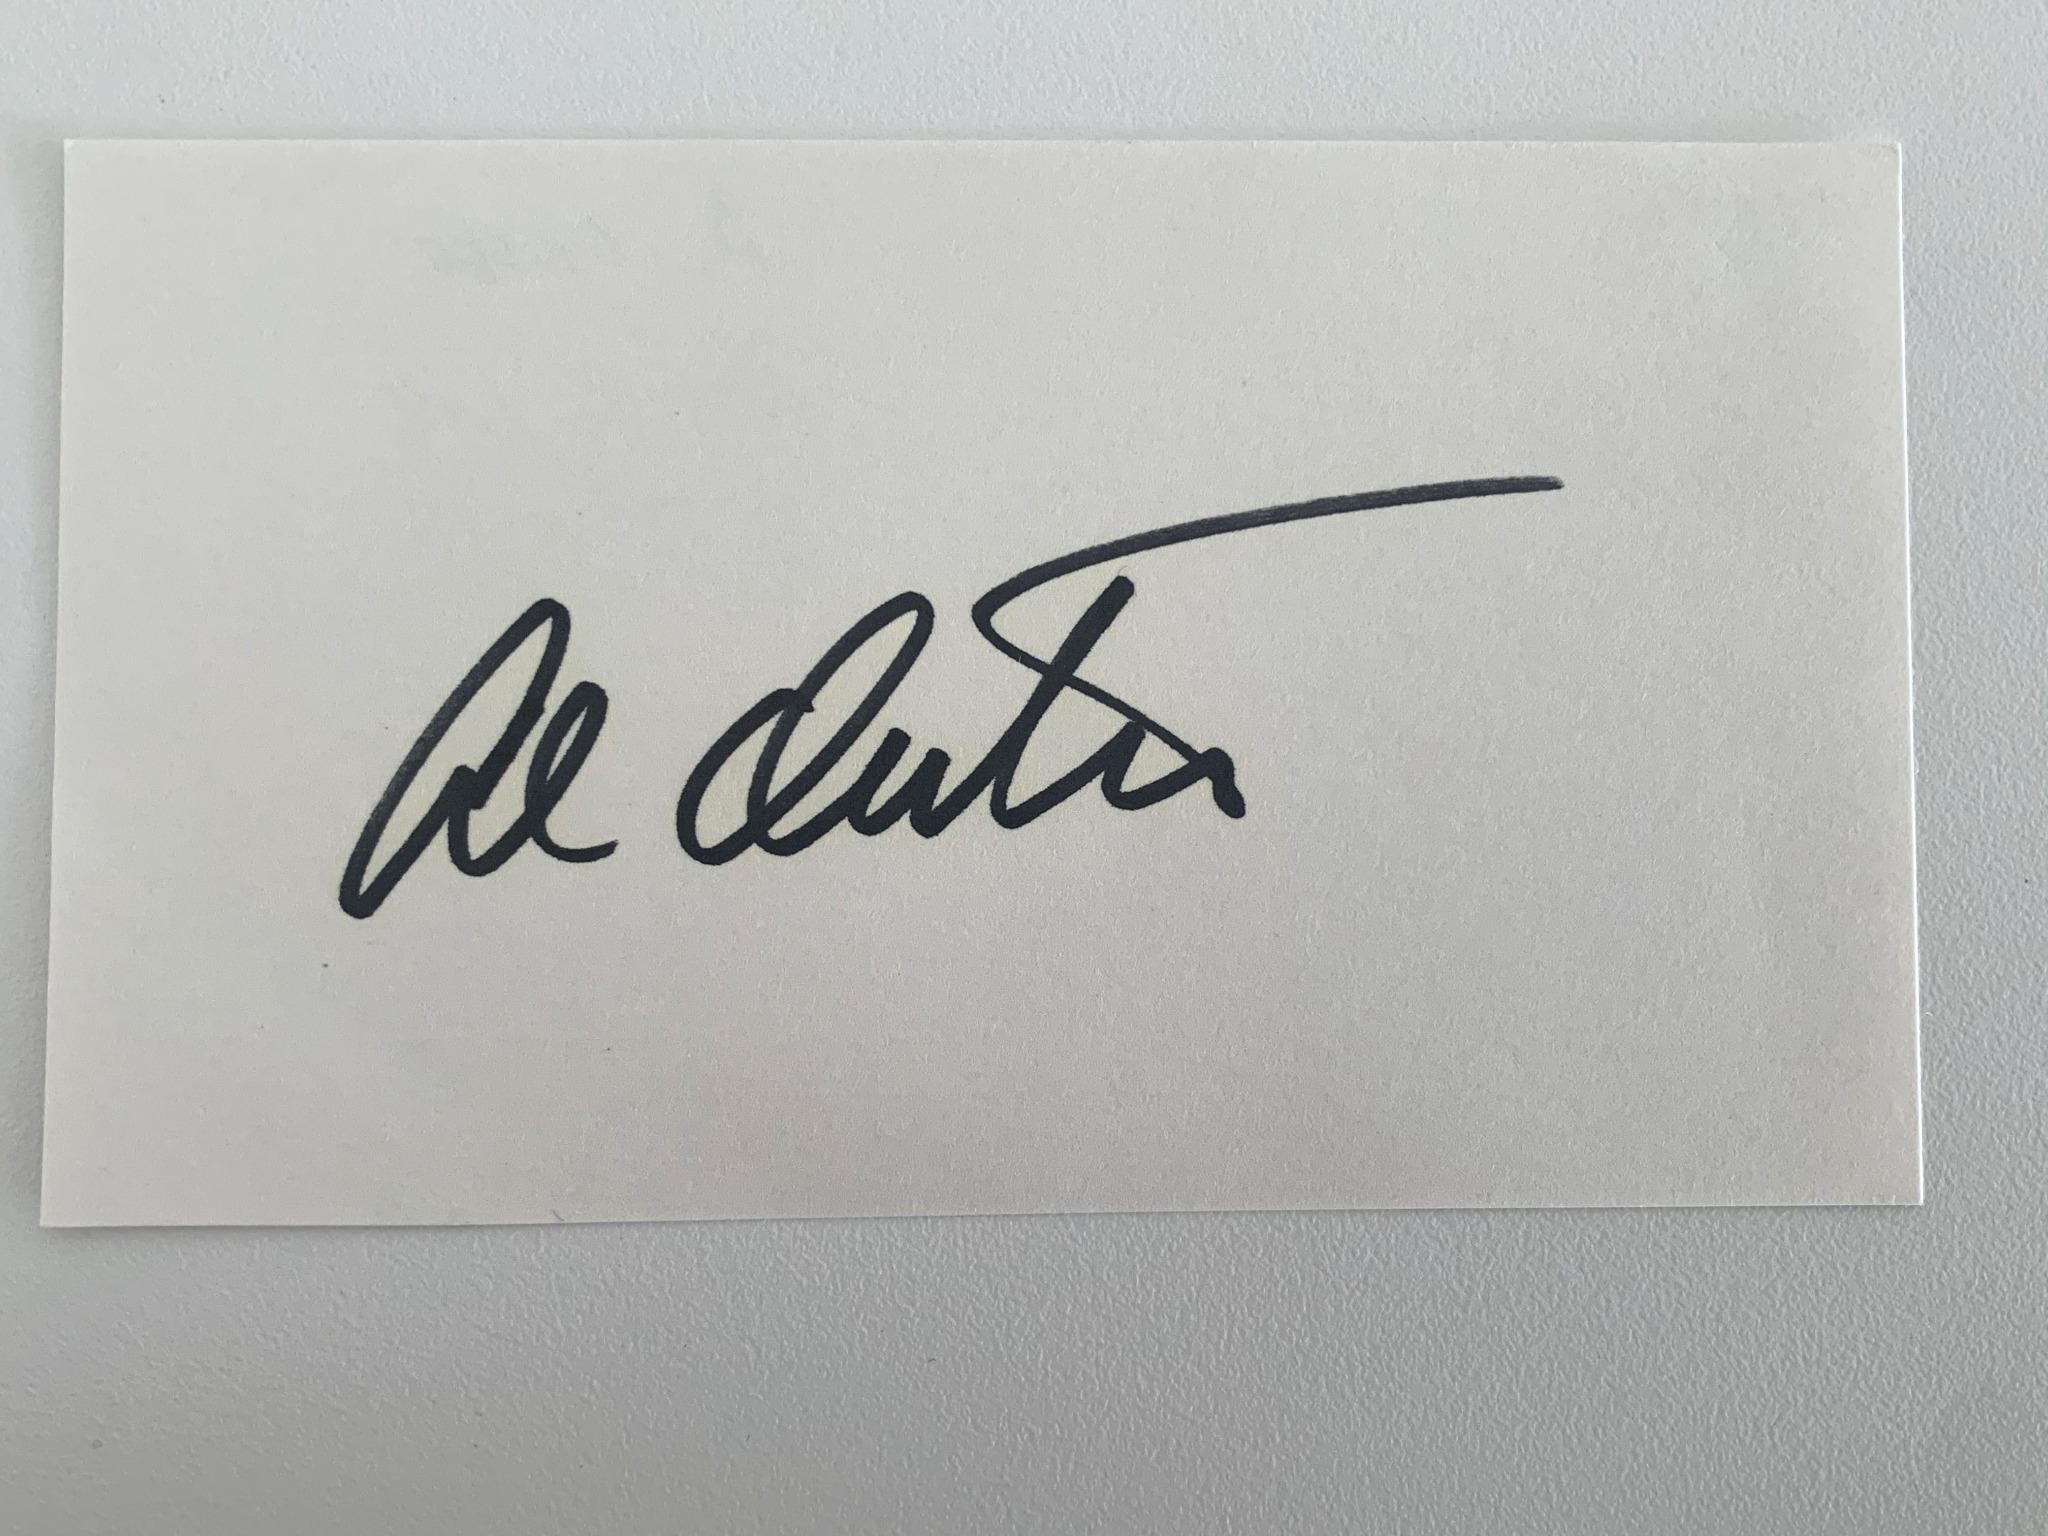 Al Oerter original signature